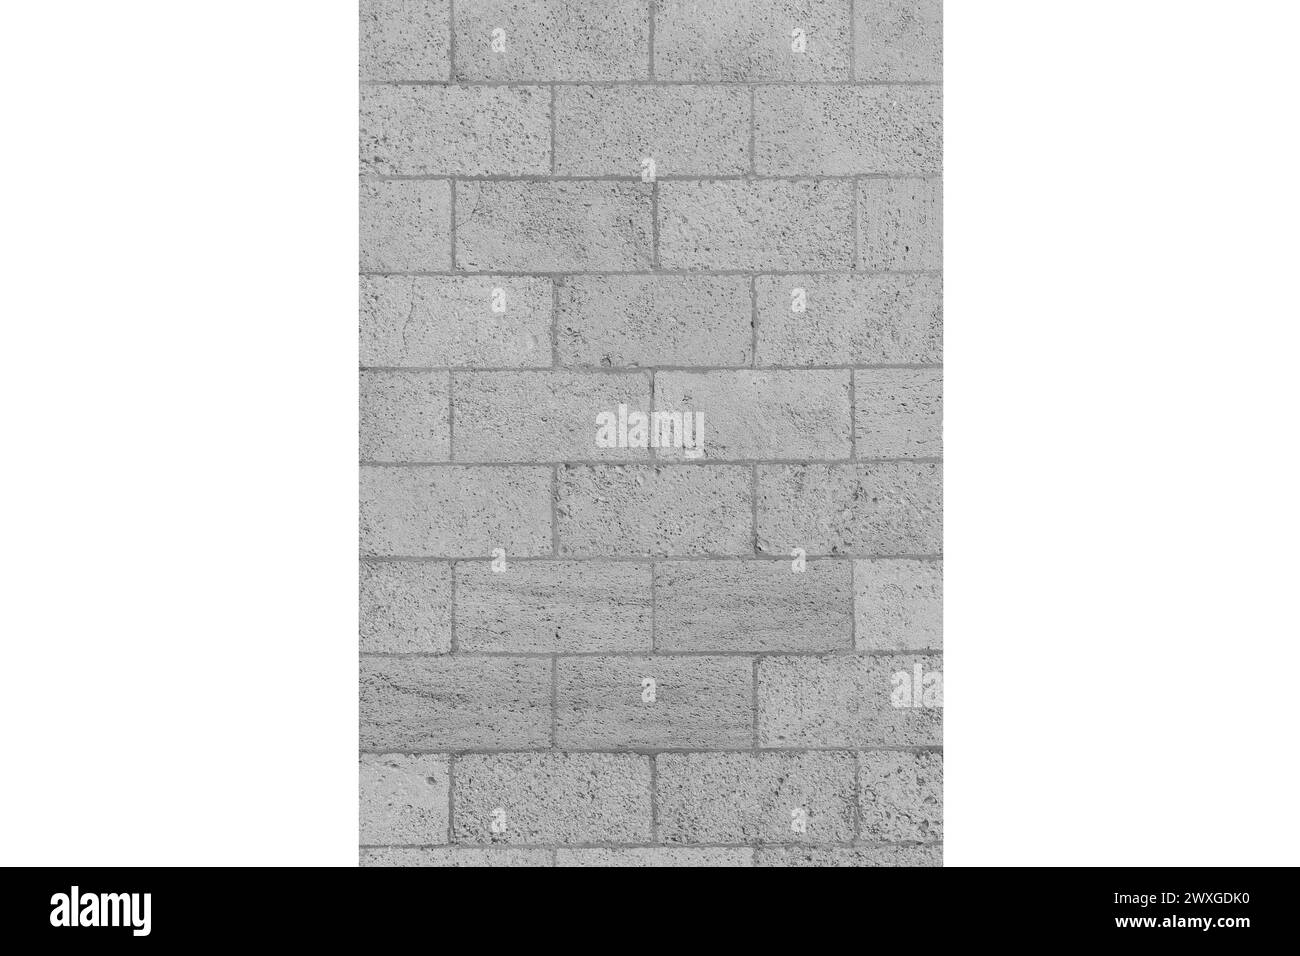 Grey sand brickwork brick masonry wall sample object white background isolated architecture facade exterior building background gray. Stock Photo